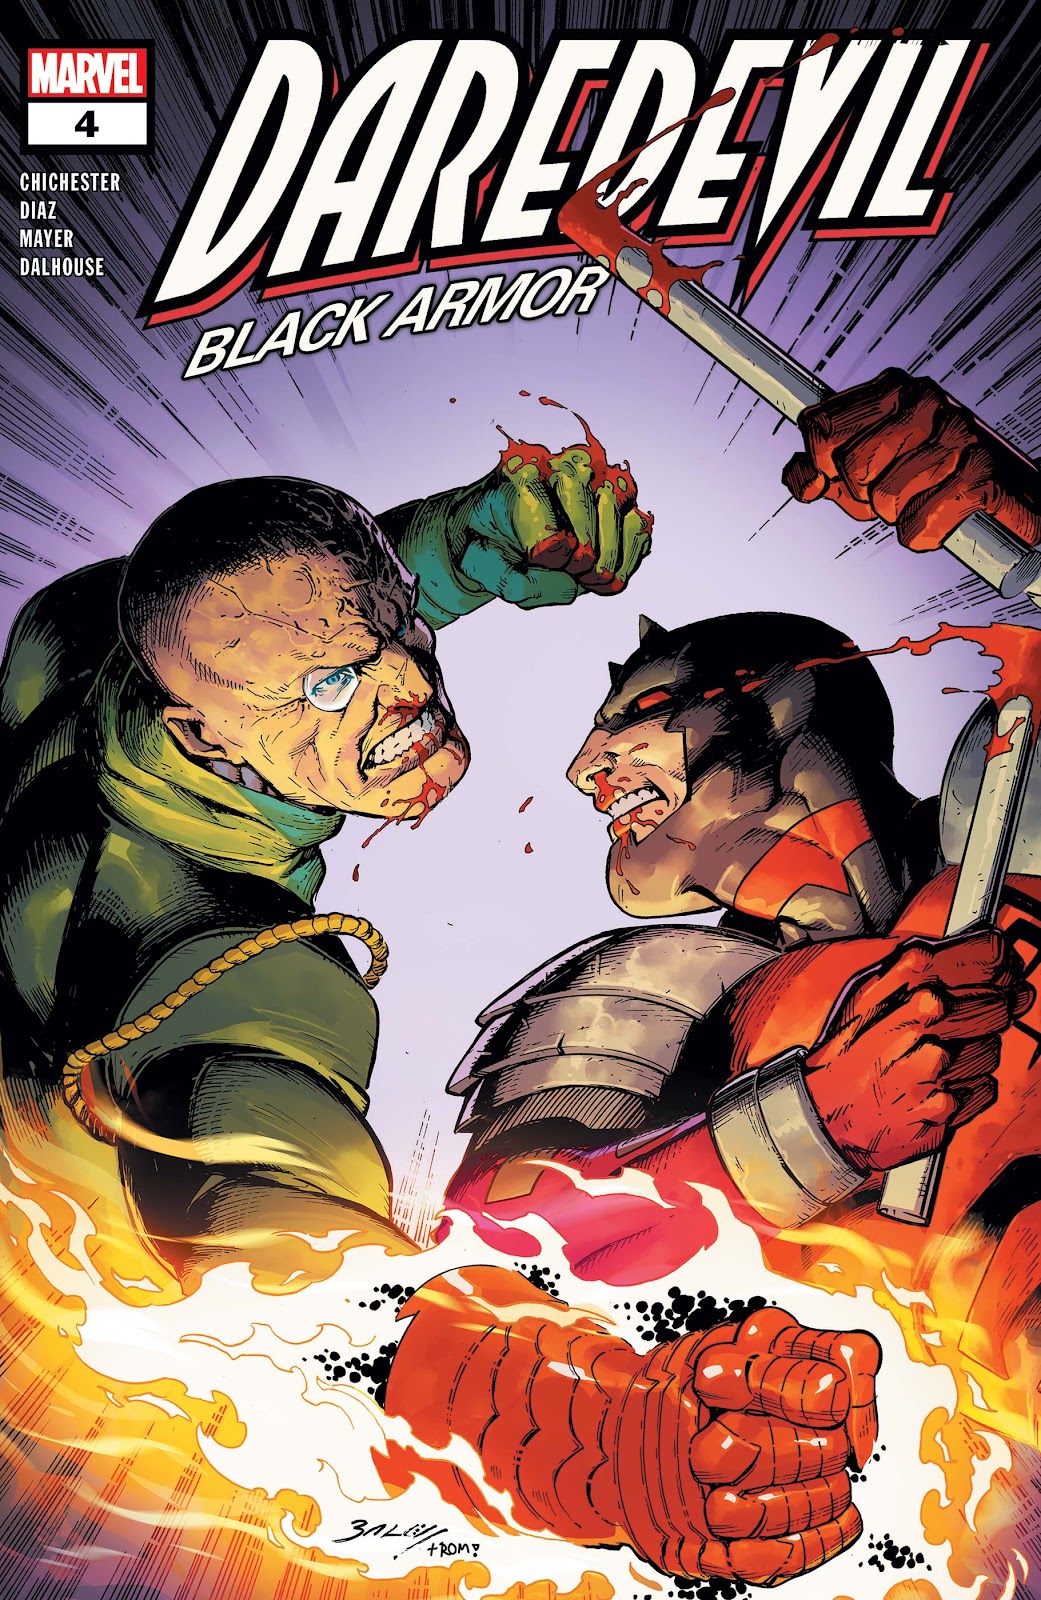 Daredevil: Black Armor issue 4 - Page 1